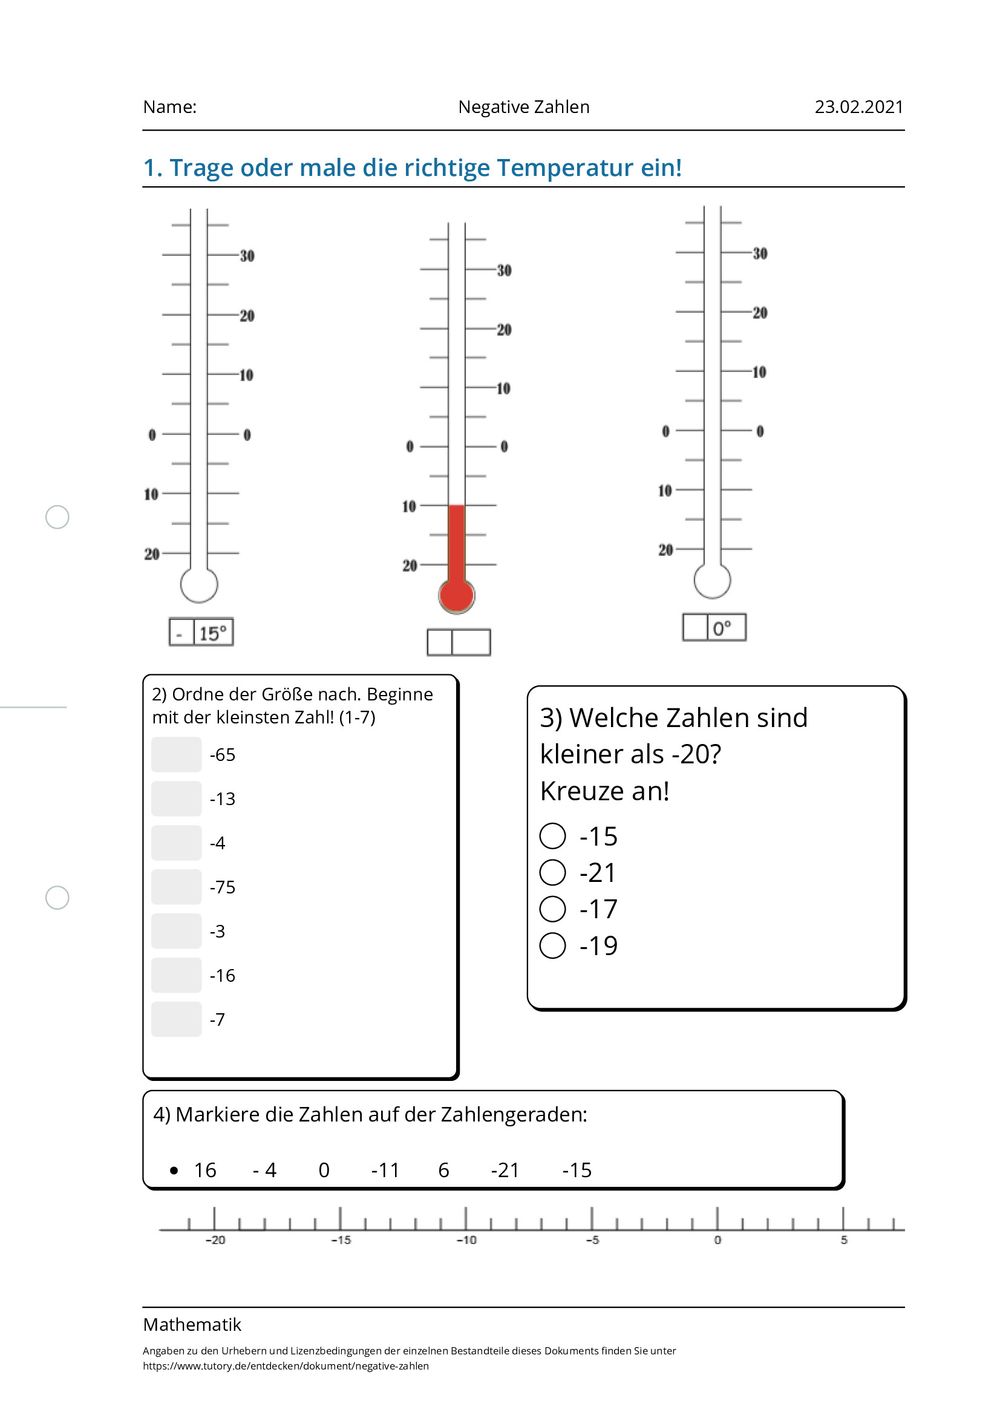 Arbeitsblatt - Negative Zahlen - Mathematik - tutory.de